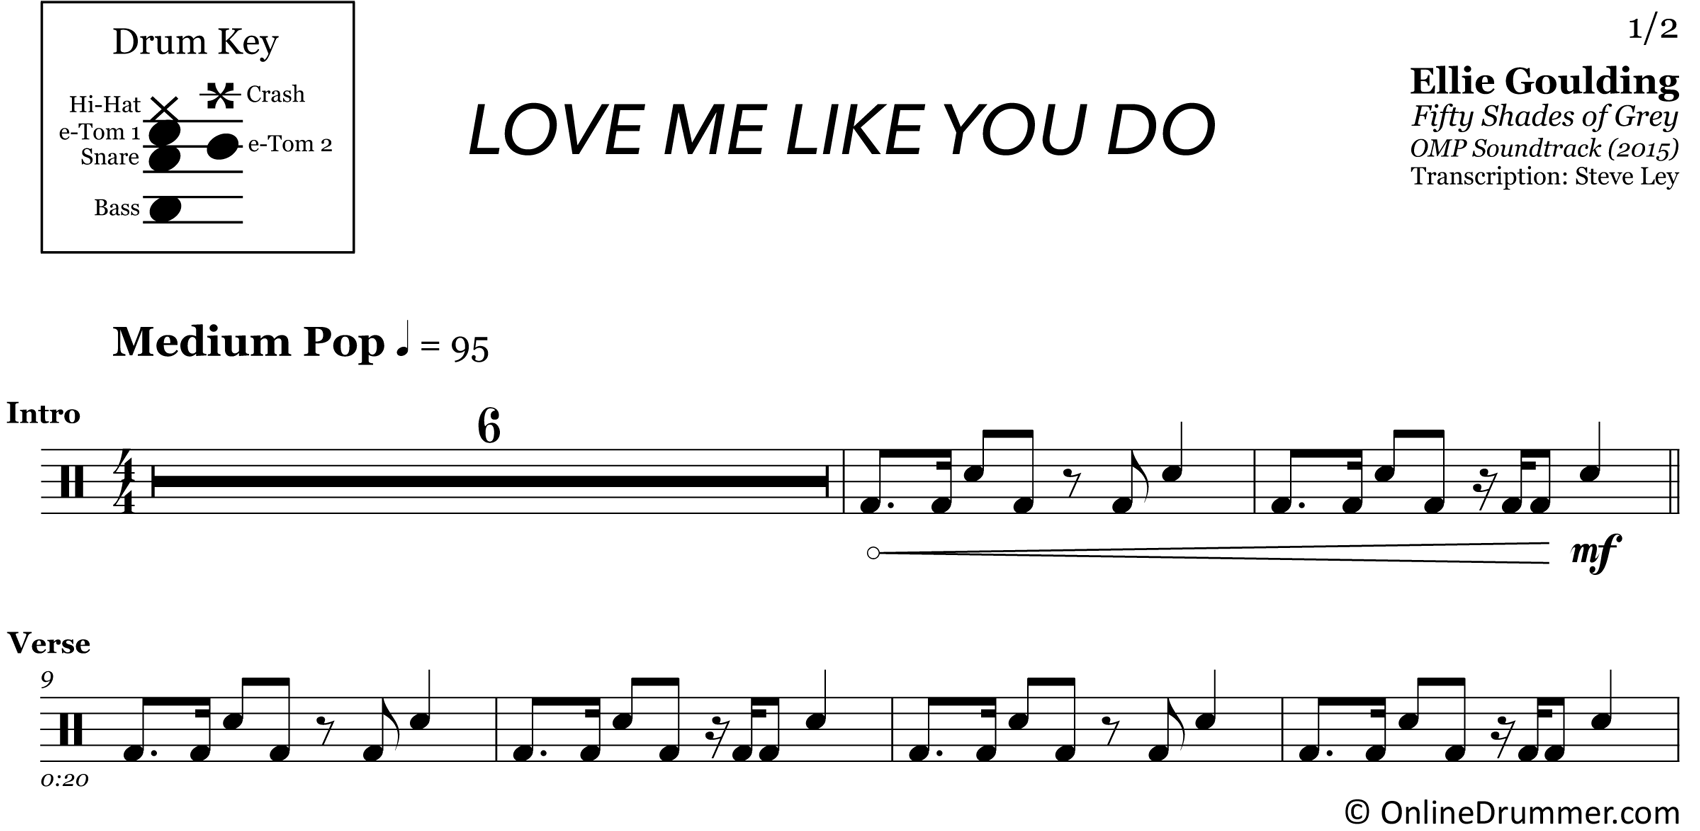 Love Me Like You Do - Ellie Goulding - Drum Sheet Music